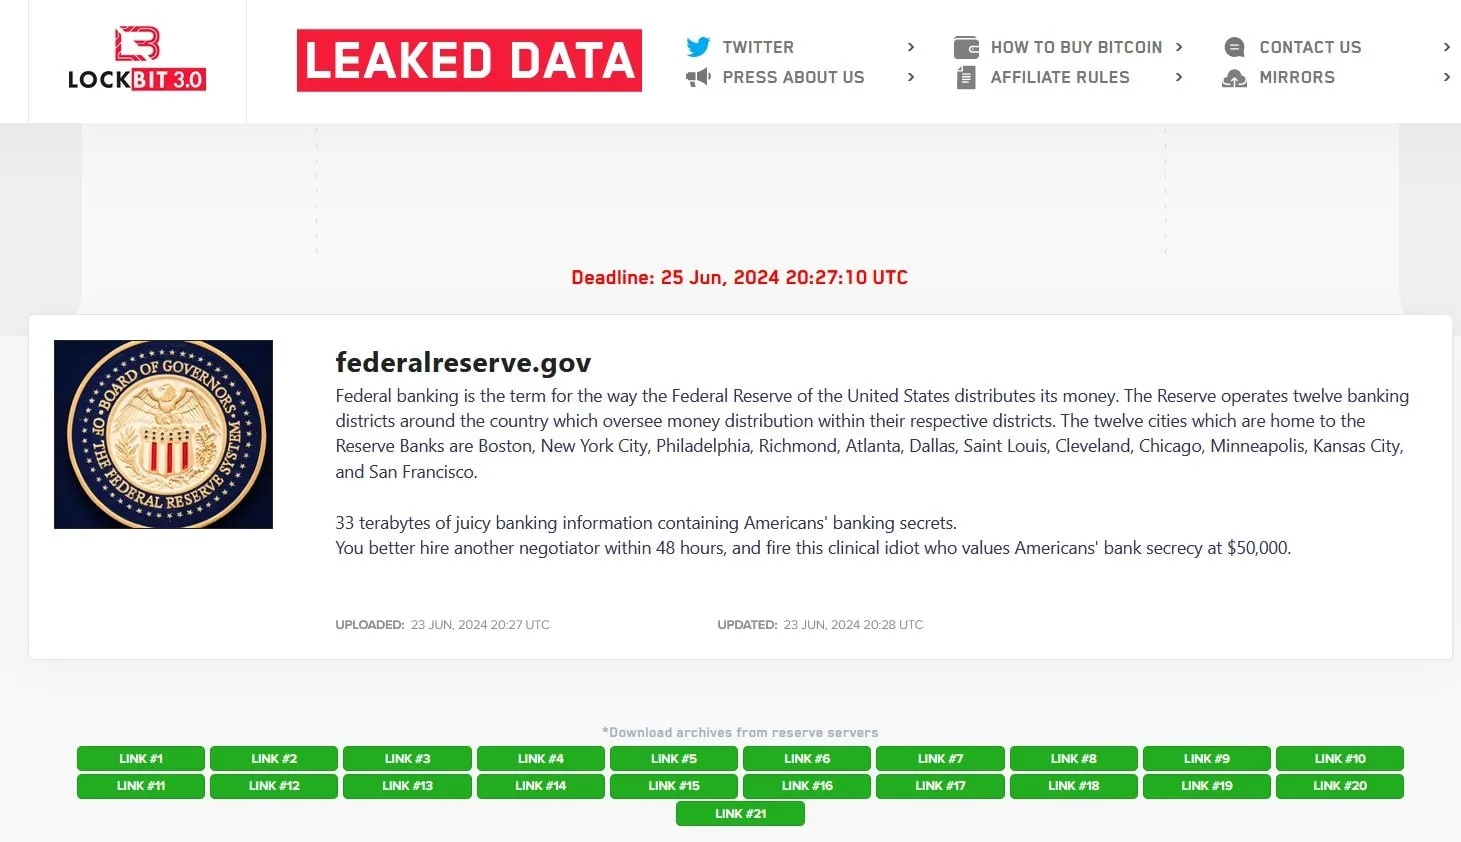 LockBit leaks data